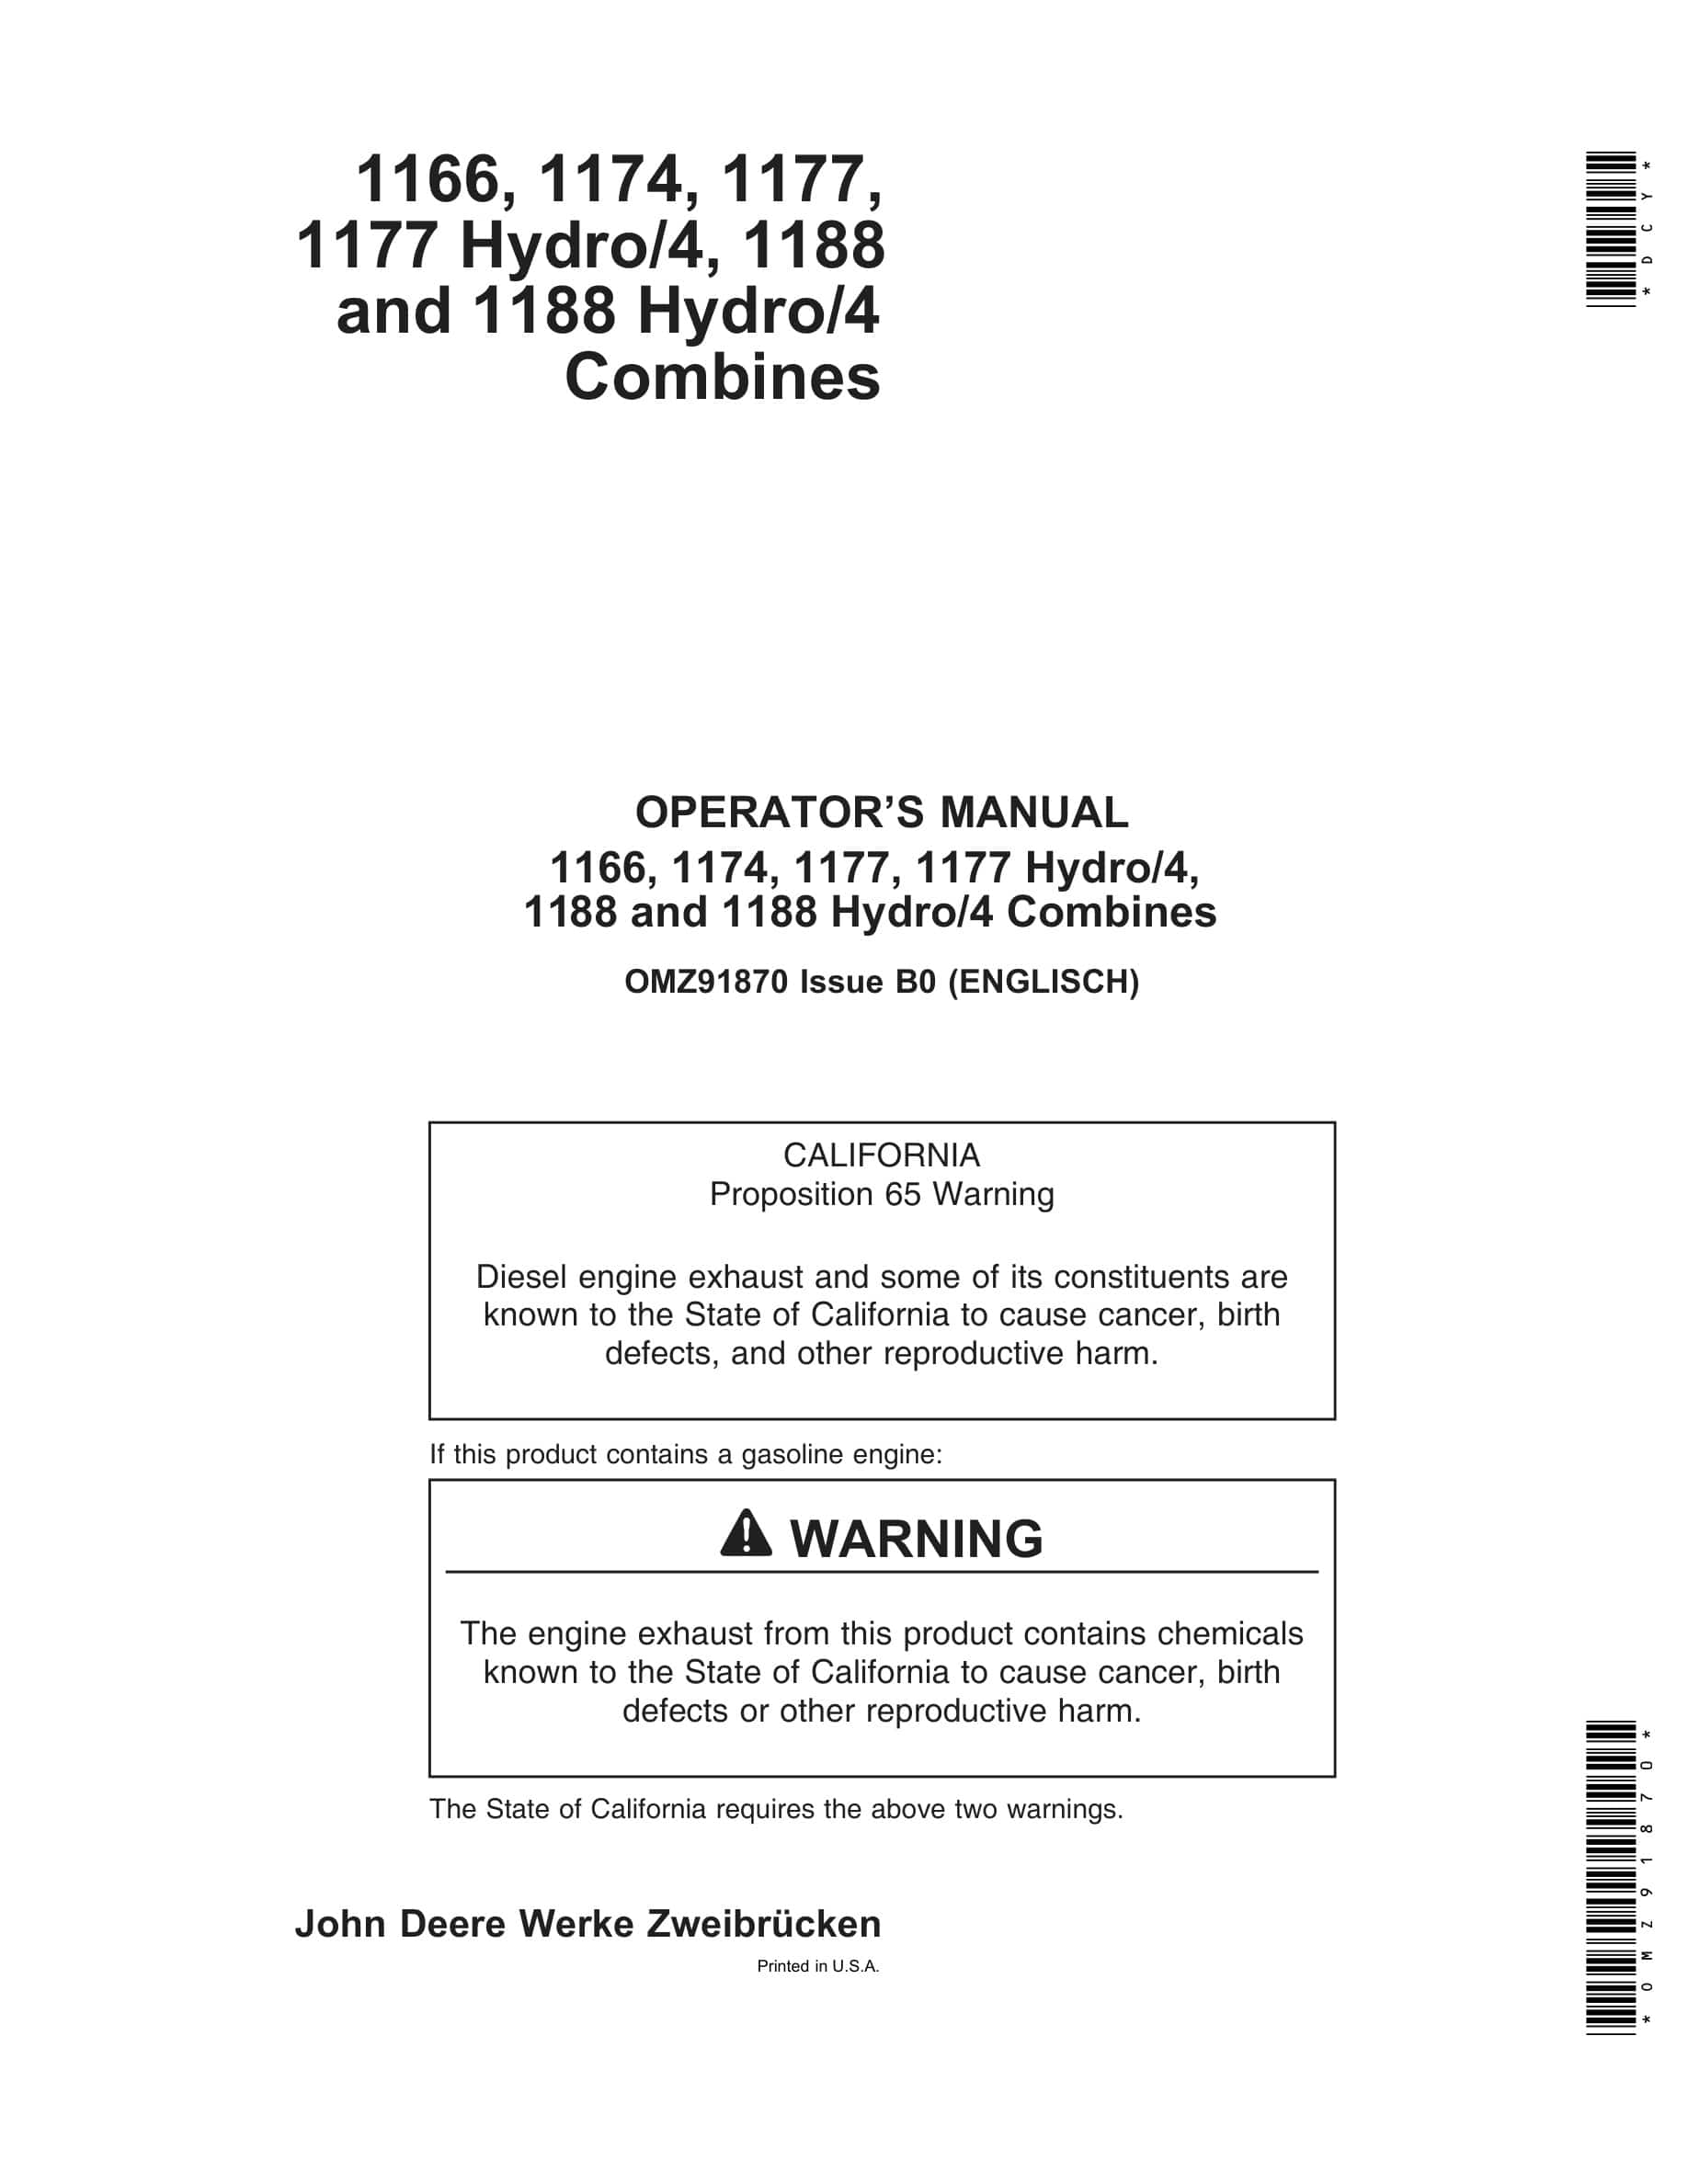 John Deere 1166, 1174, 1177, 1177 Hydro 4, 1188 and 1188 Hydro 4 Combine Operator Manual OMZ91870-1